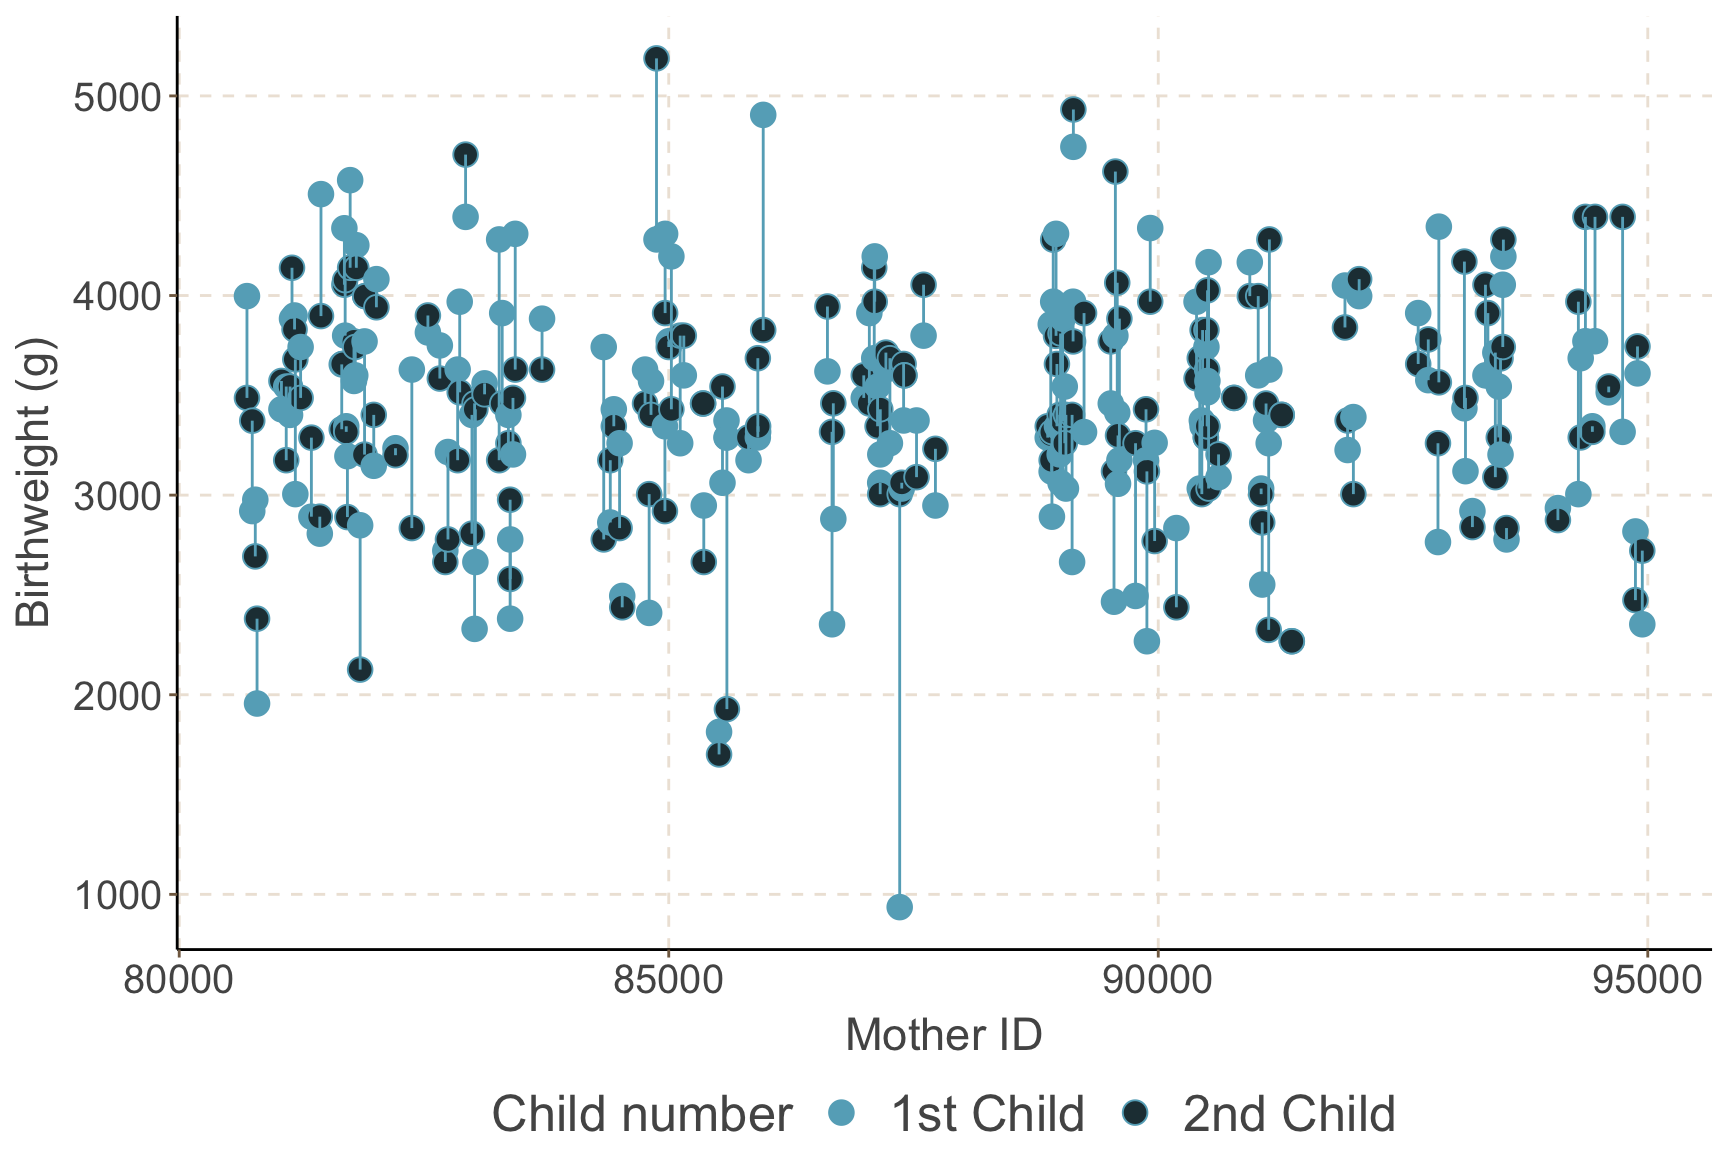 Birthweight of siblings by maternal identifier